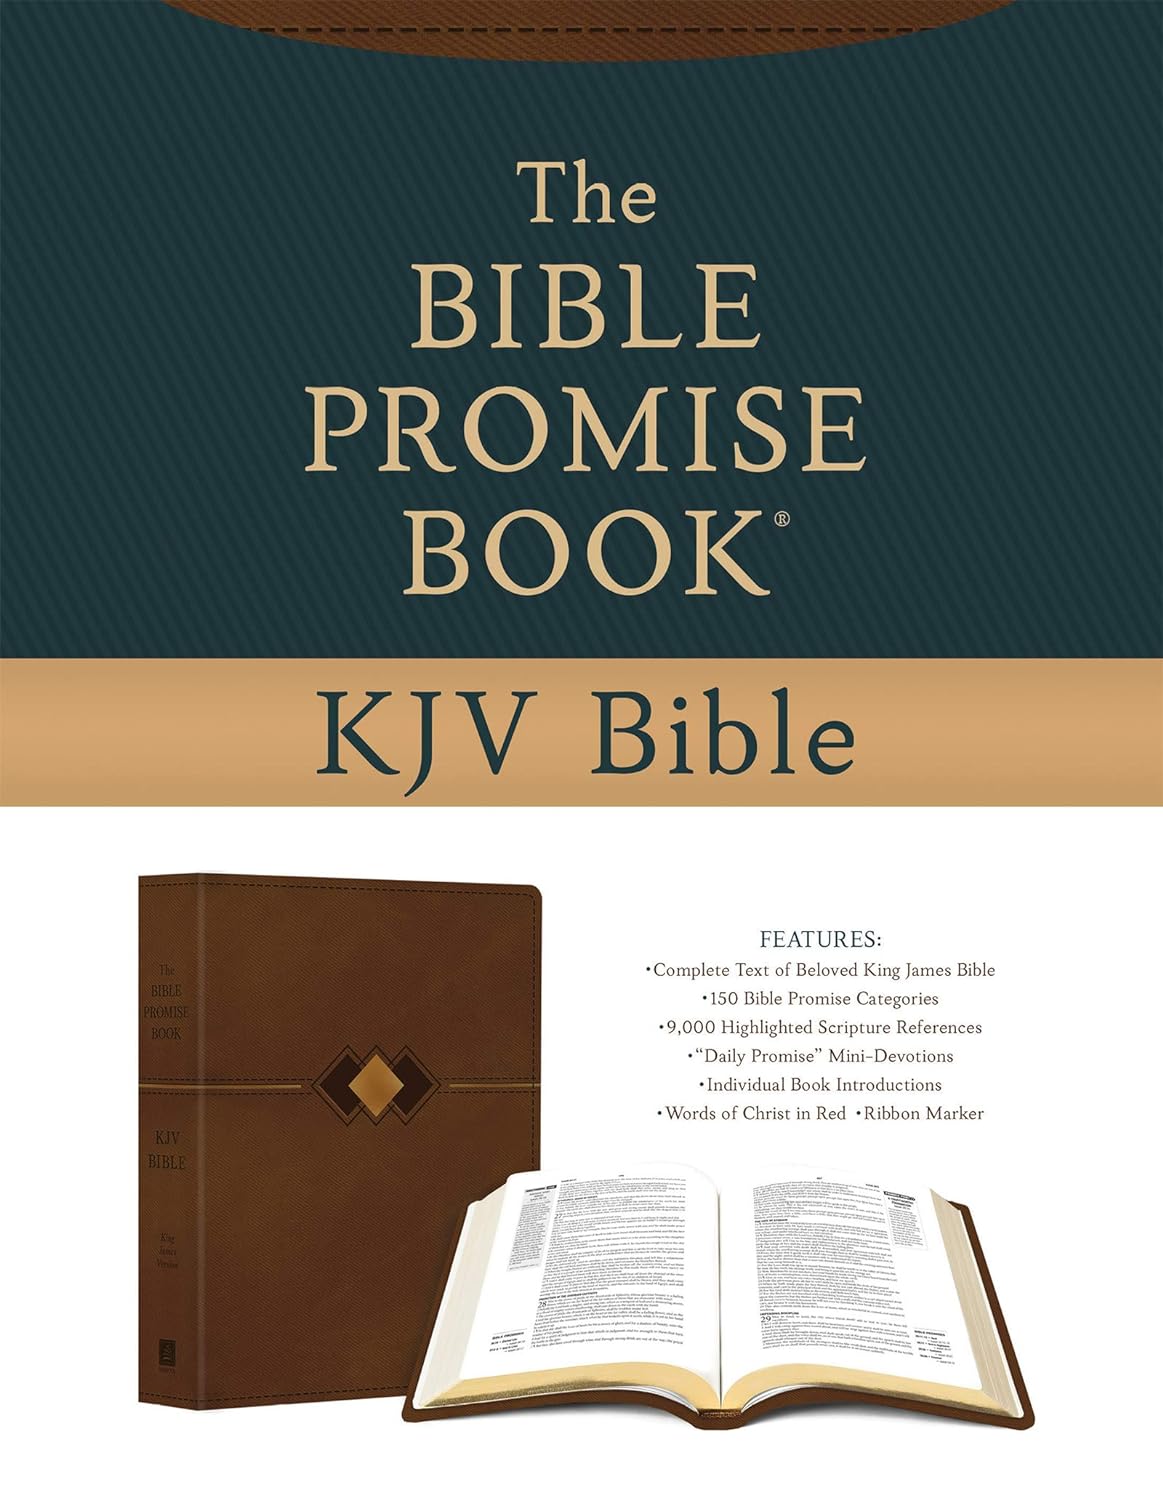 The Bible Promise Book KJV Bible